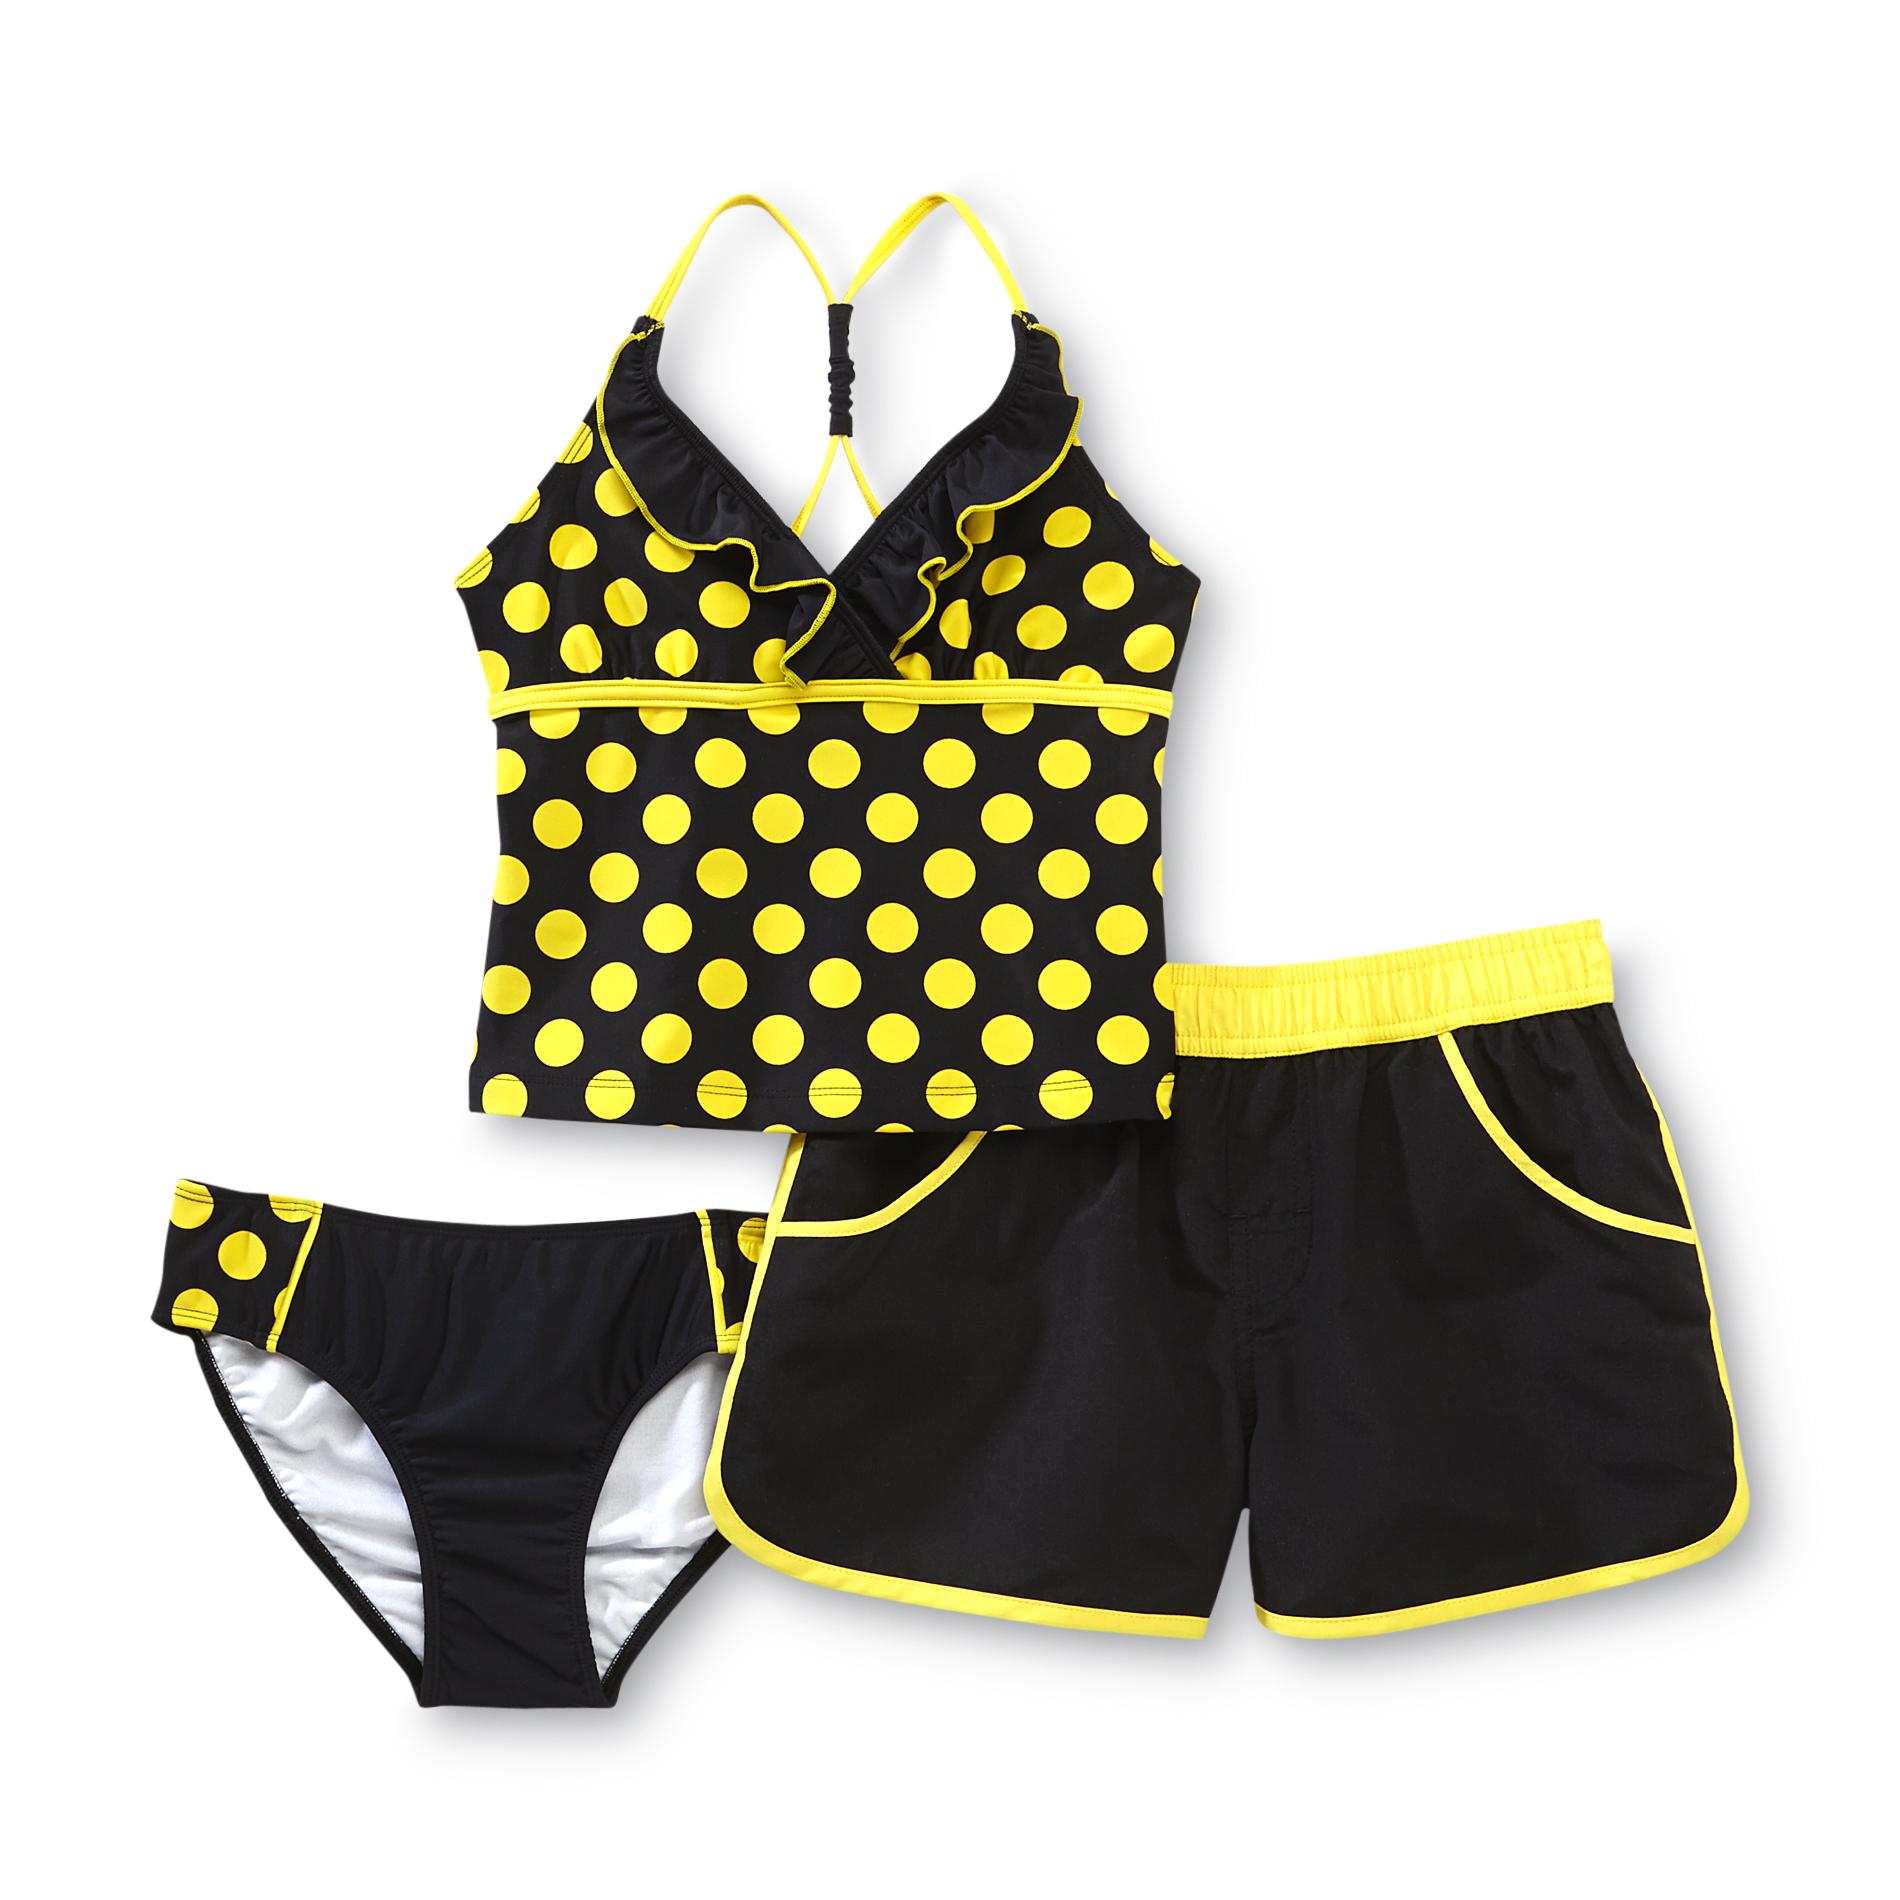 Joe Boxer Girl's 3-Piece Tankini Swimsuit Set - Two-Tone Polka Dots